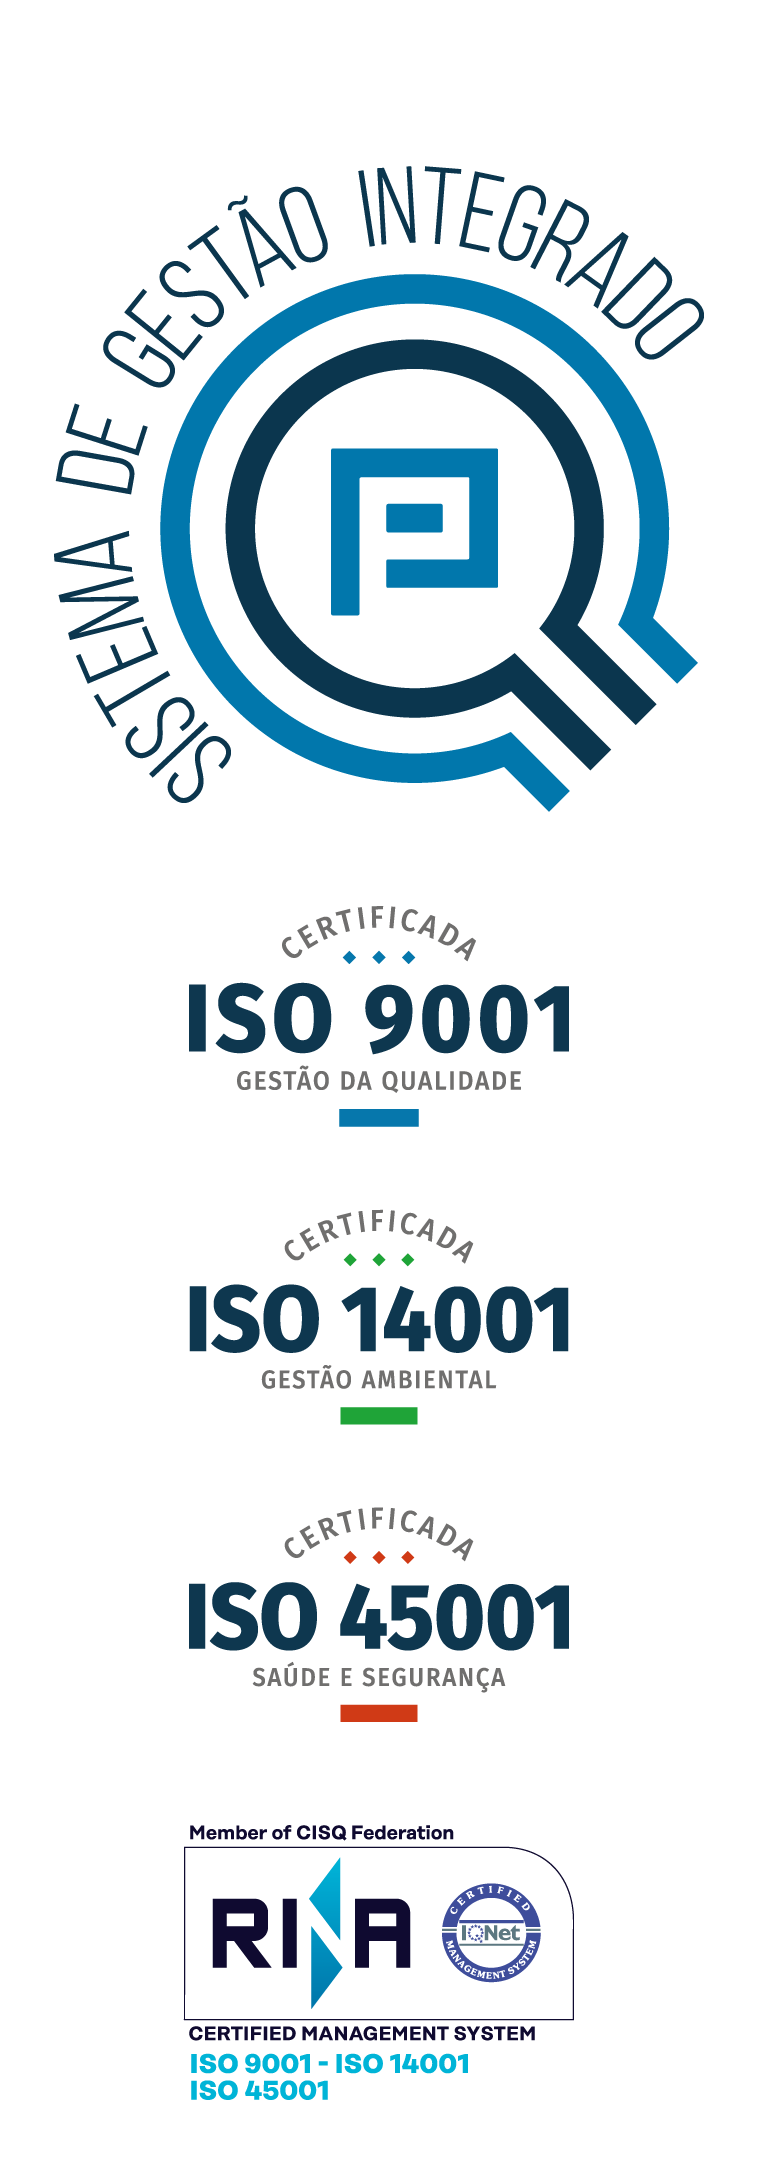 Praeng Engenharia - ISO - SGI